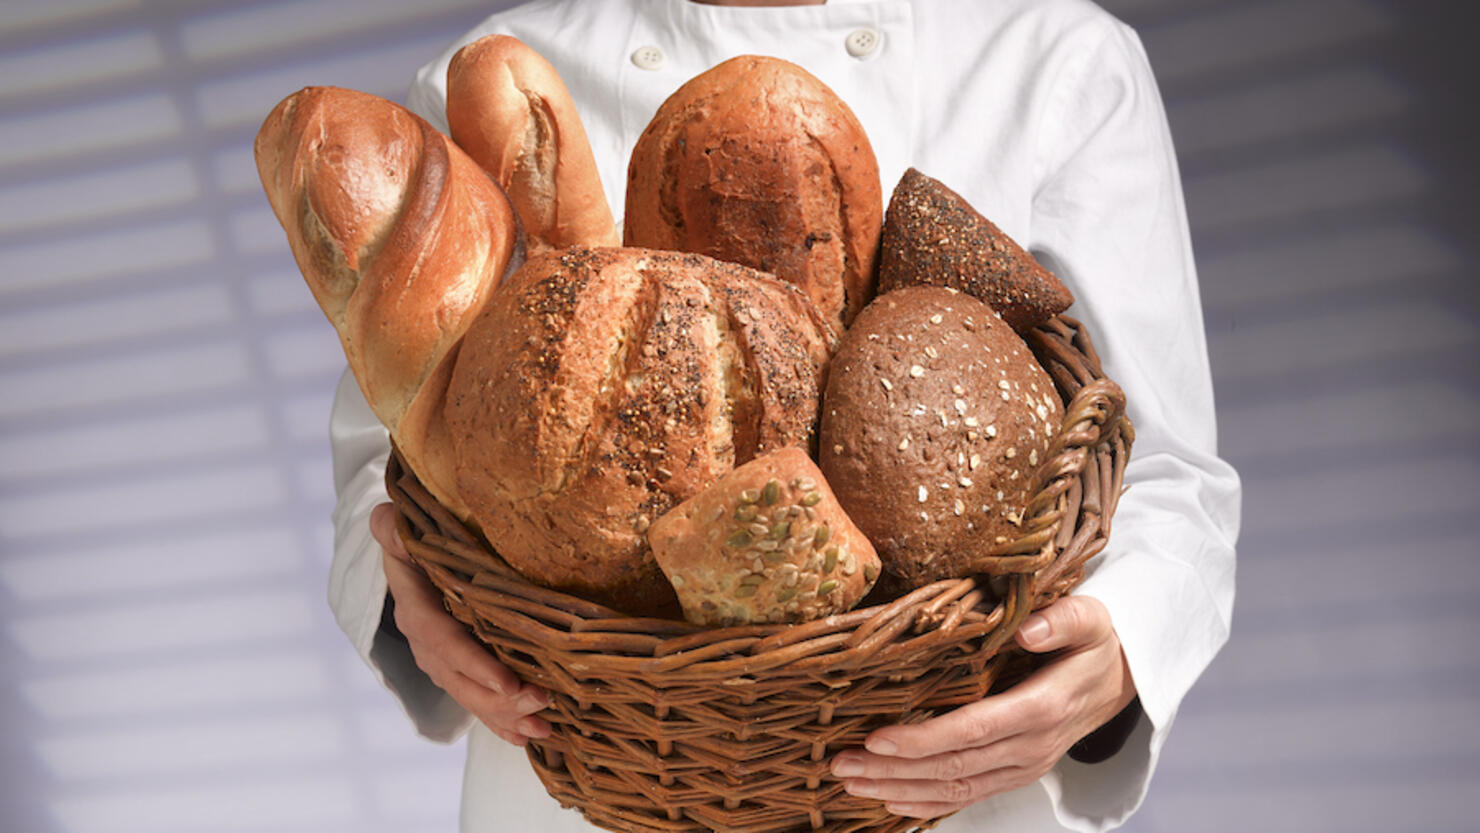 Artisanal Bread carried by junior baker